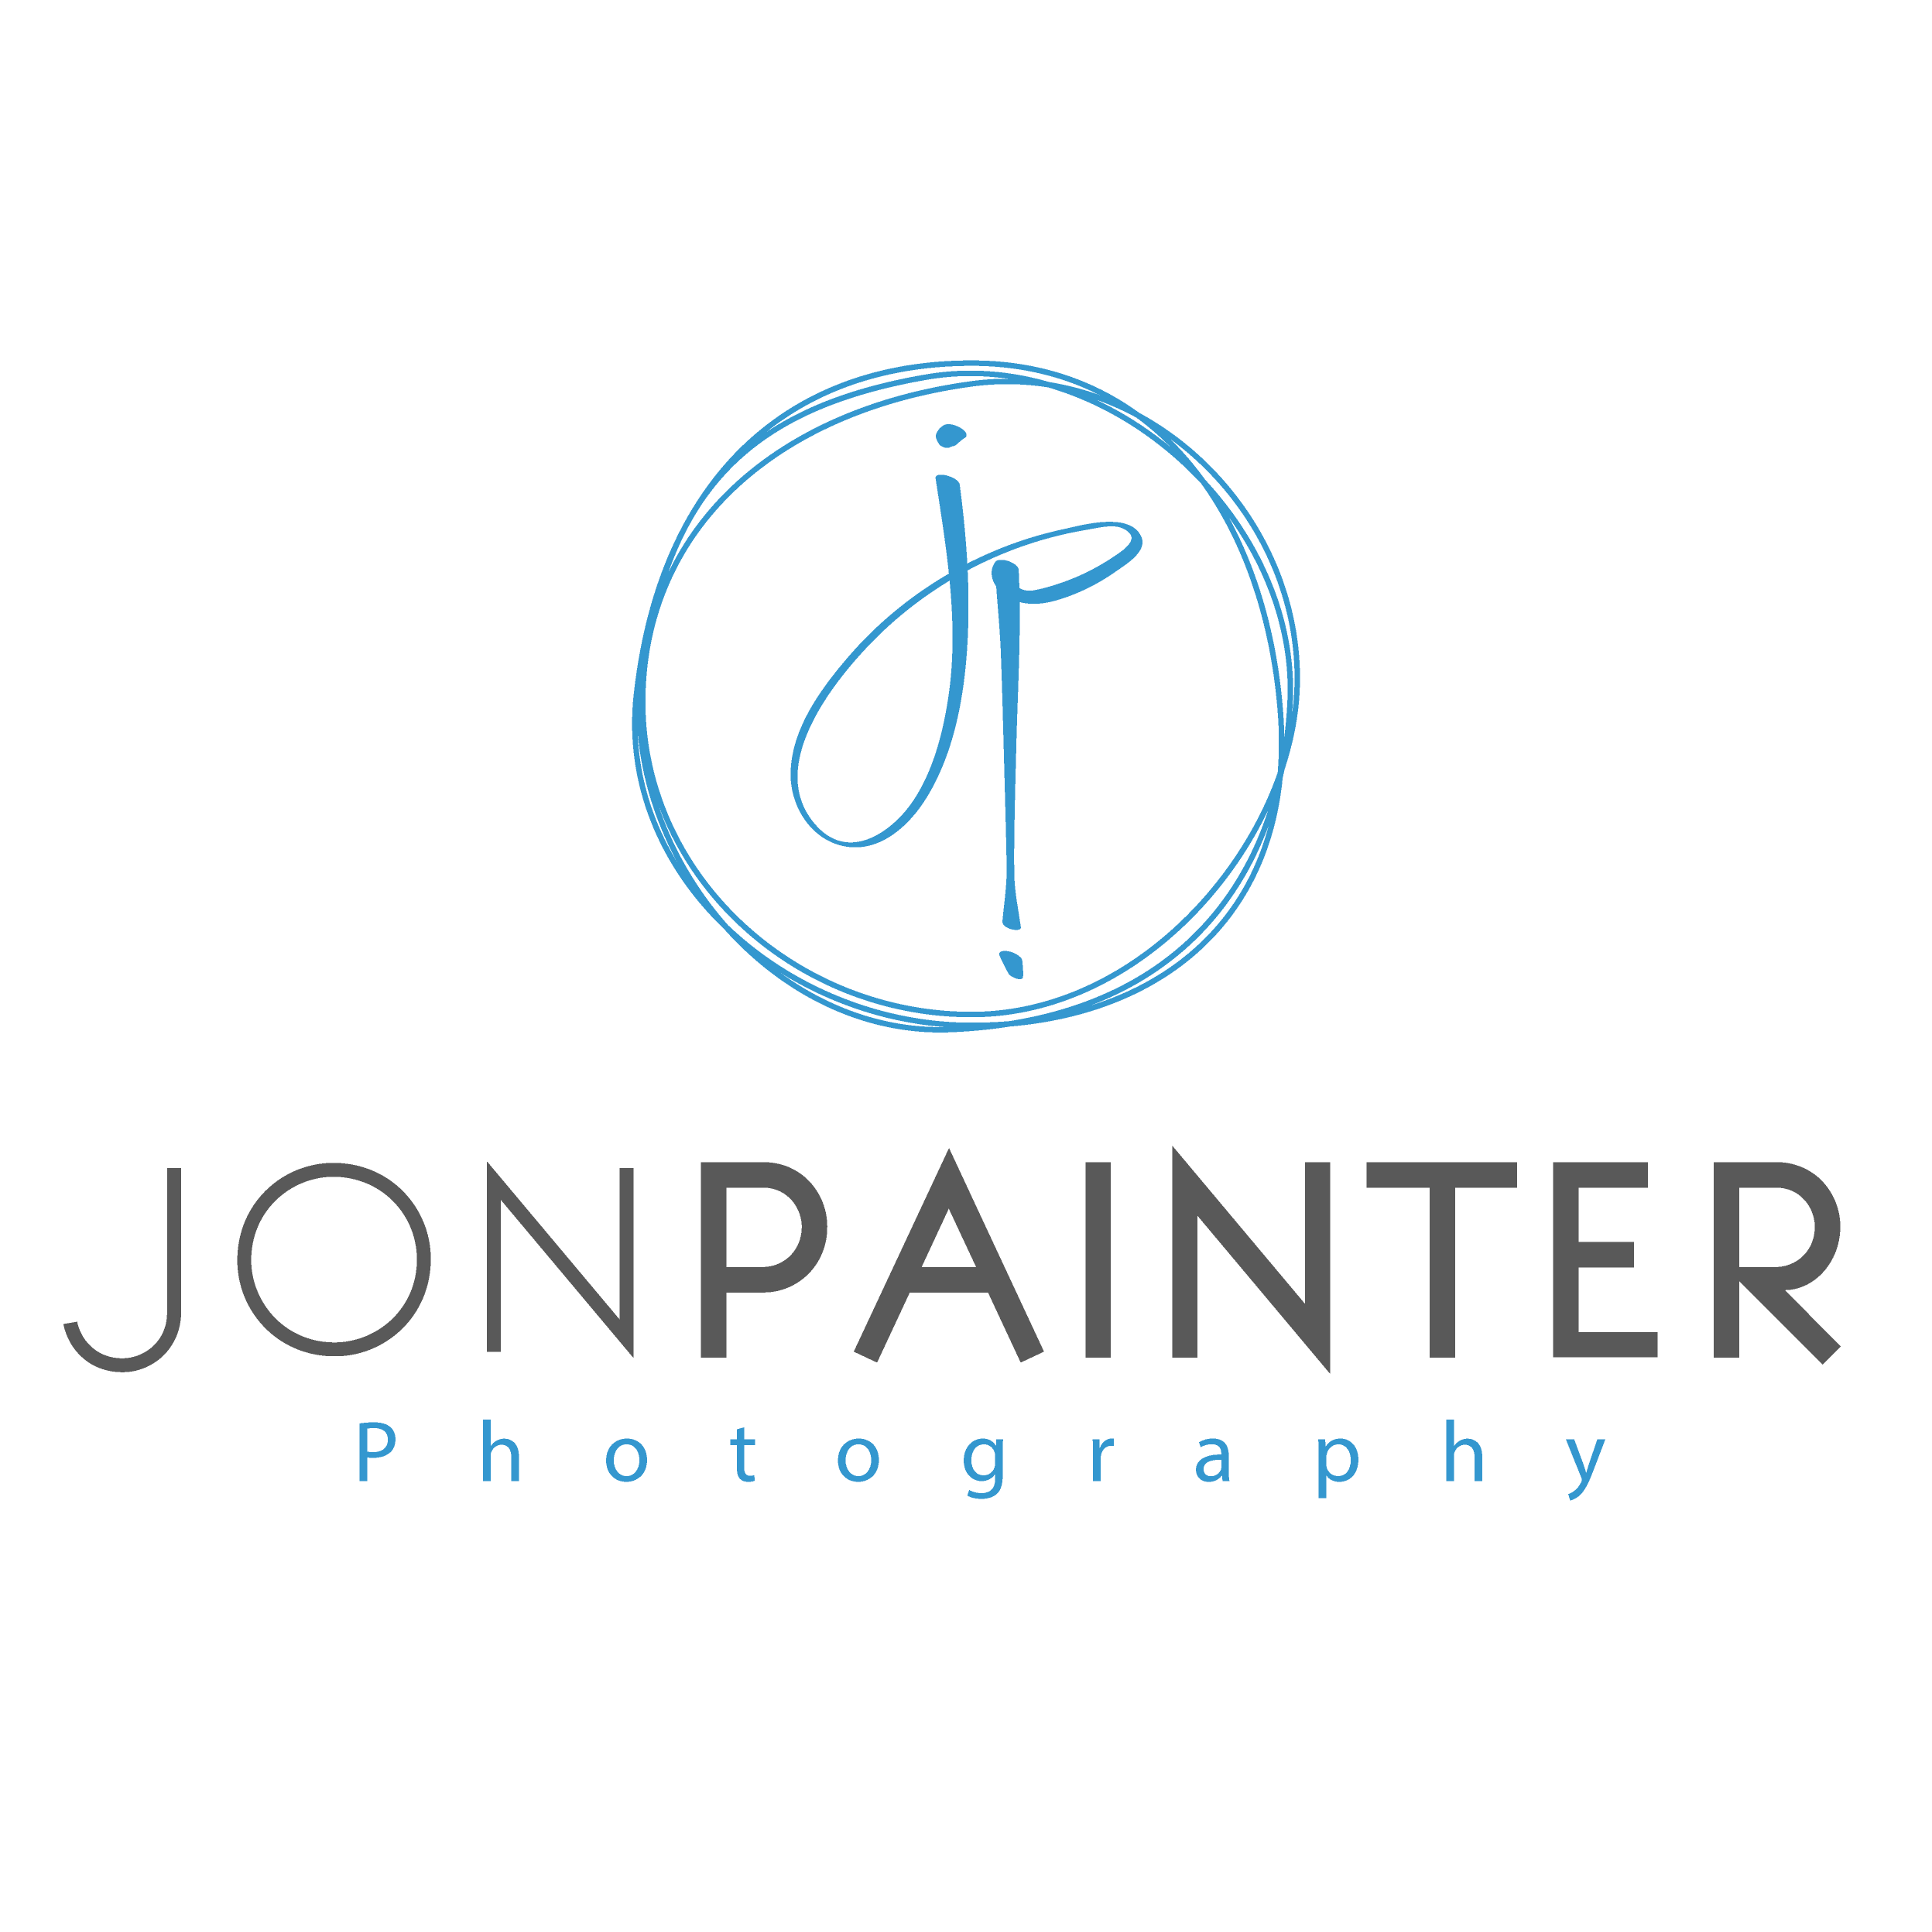 Jon Painter [dot] com